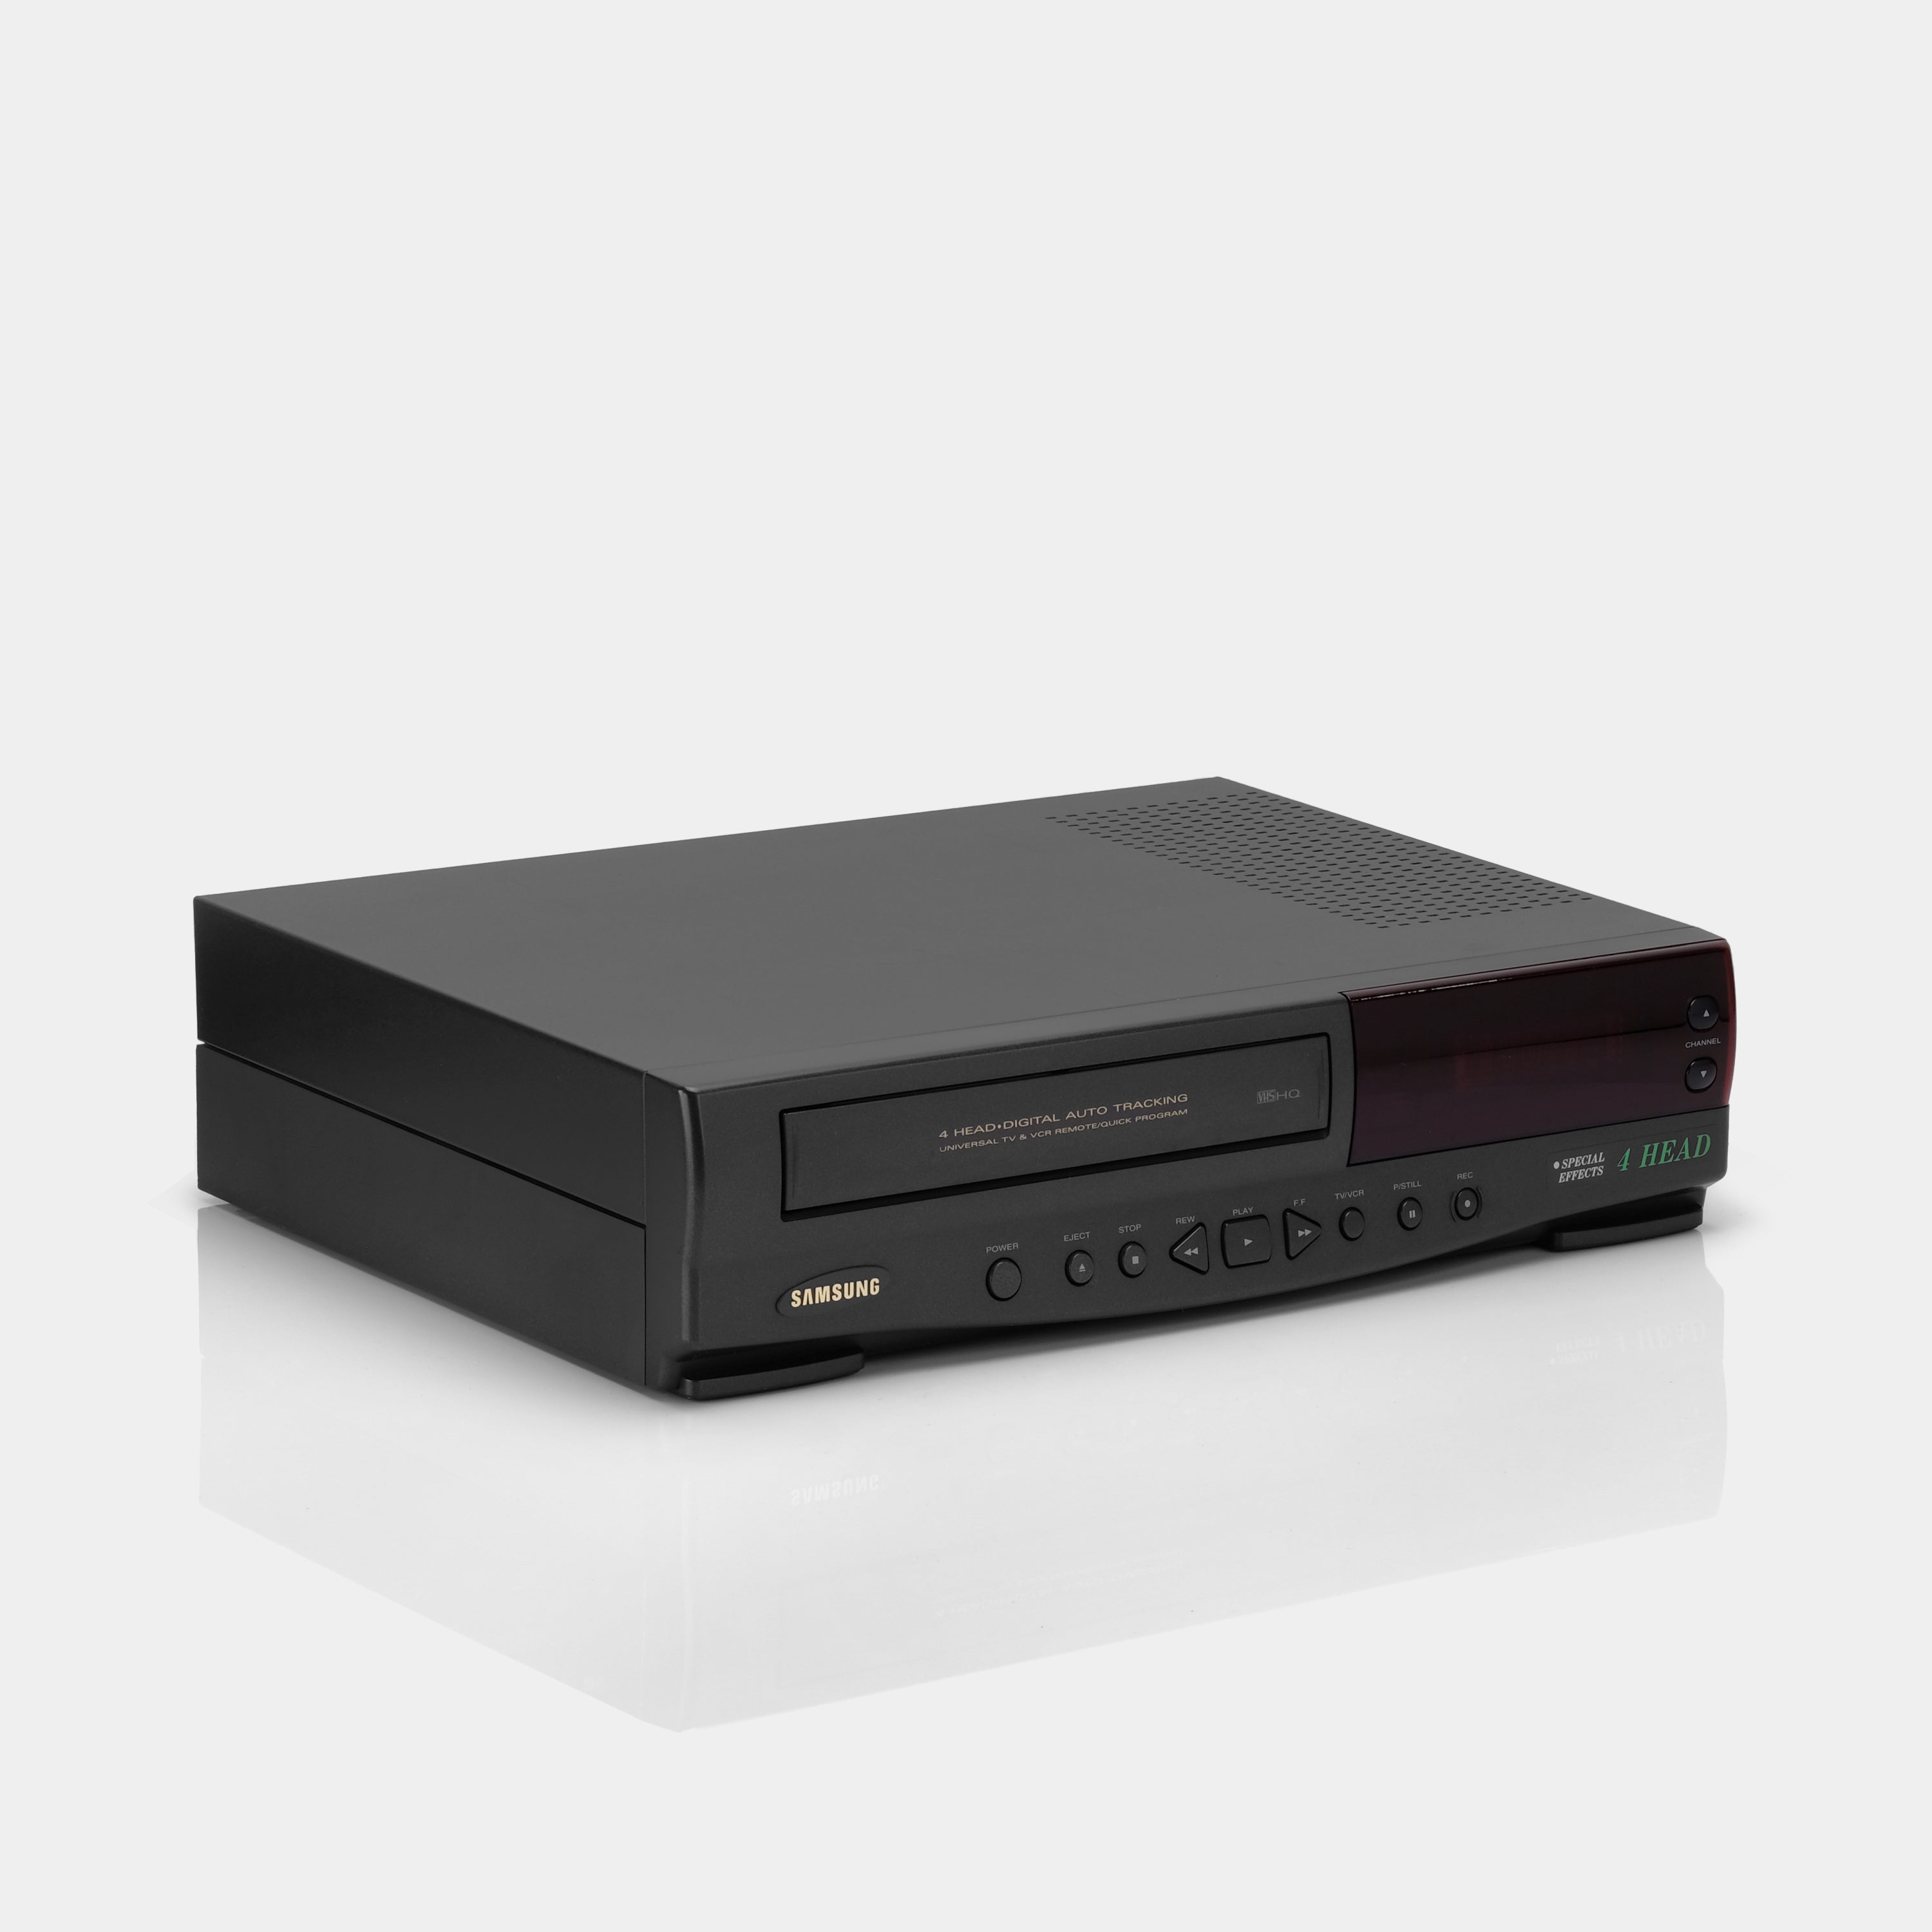 Samsung VR5704 VCR VHS Player